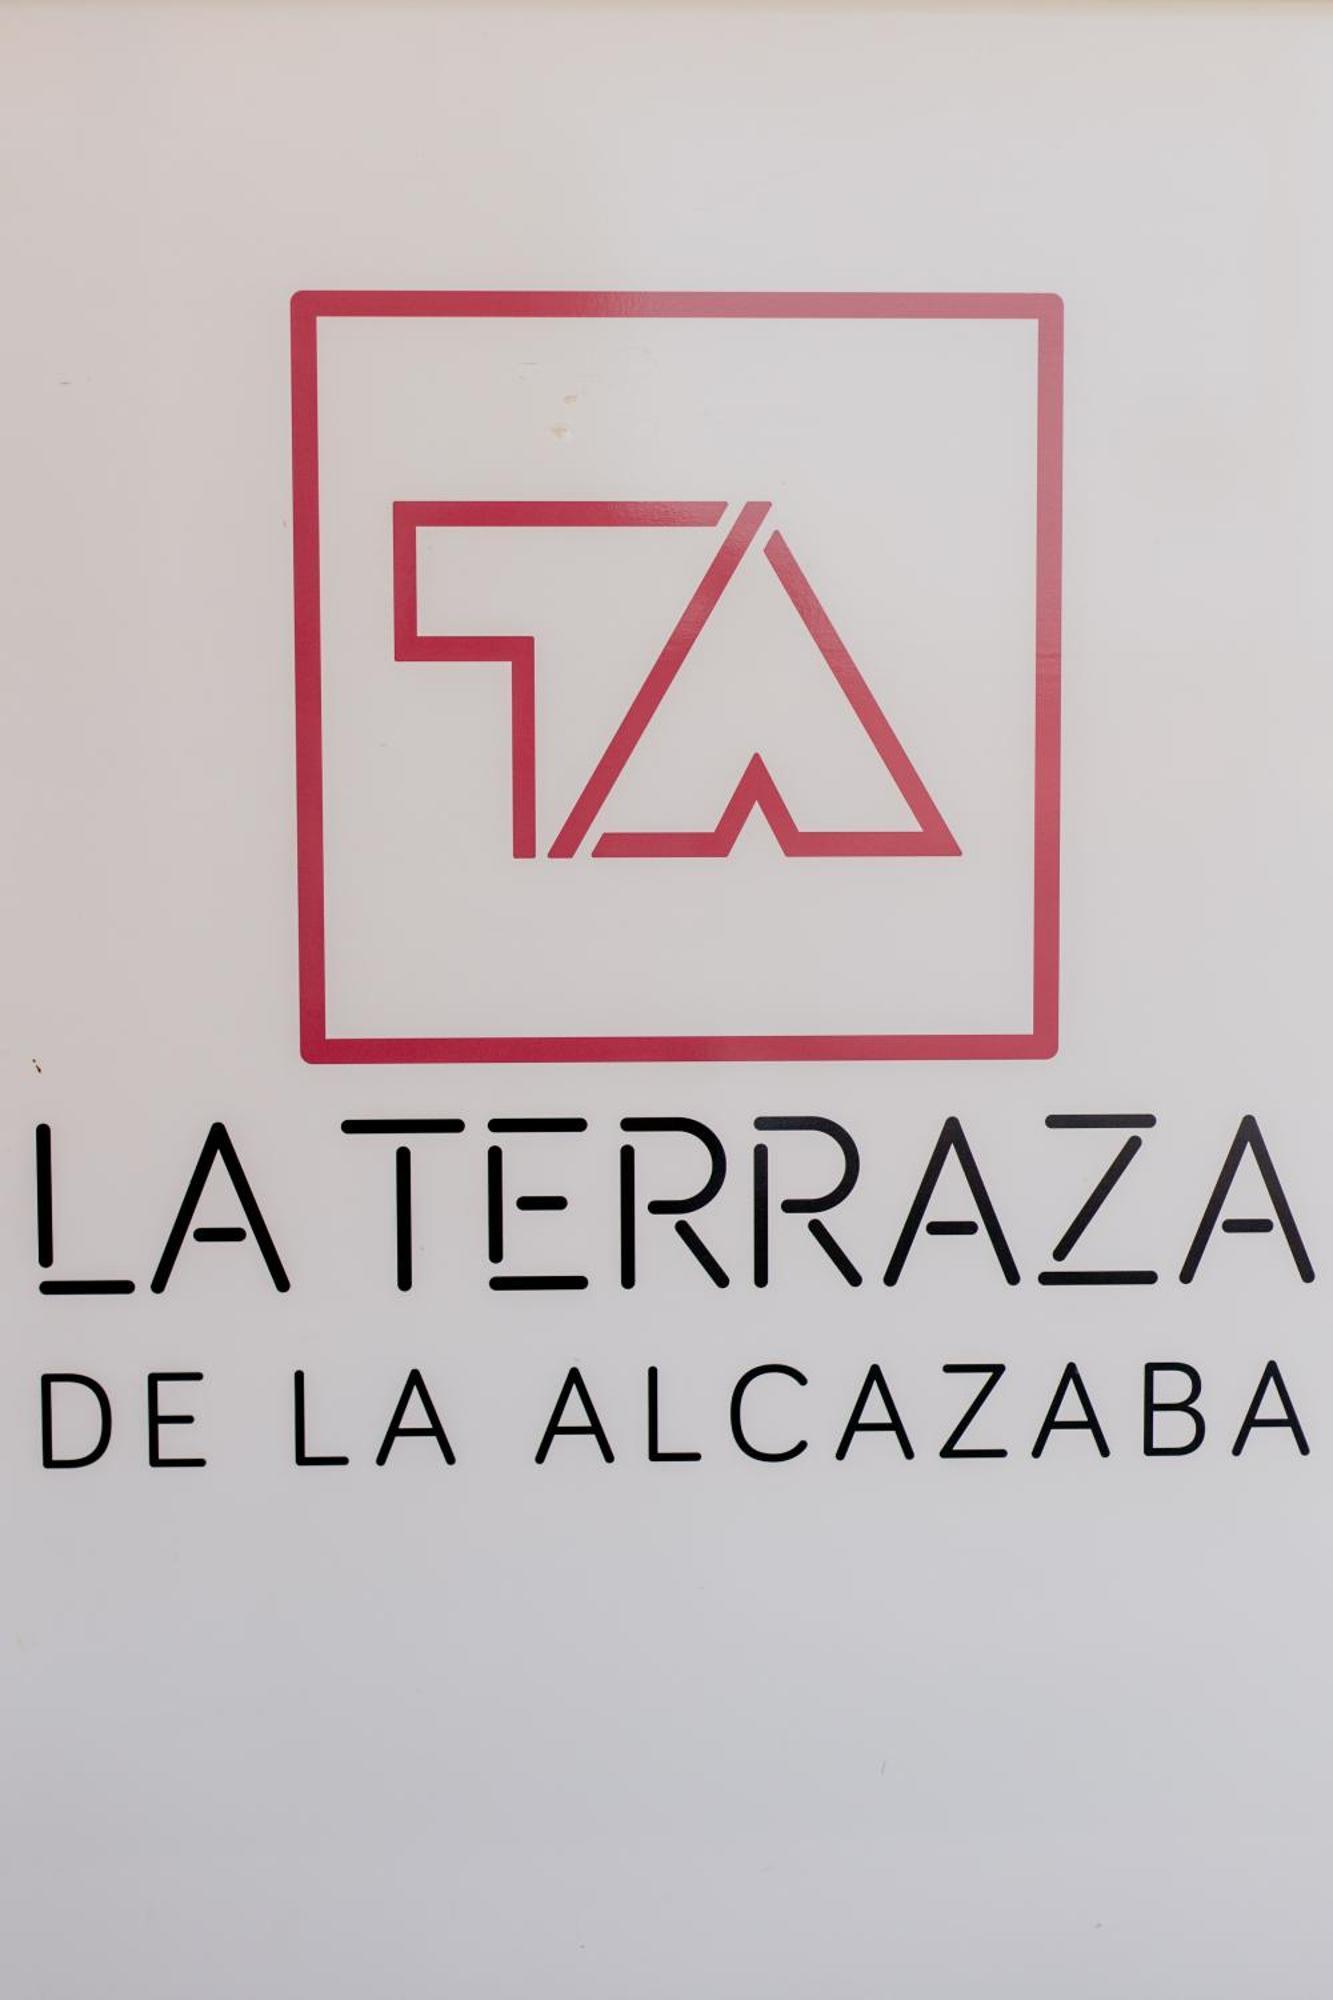 Alcazaba Premium Hotel Малага Экстерьер фото